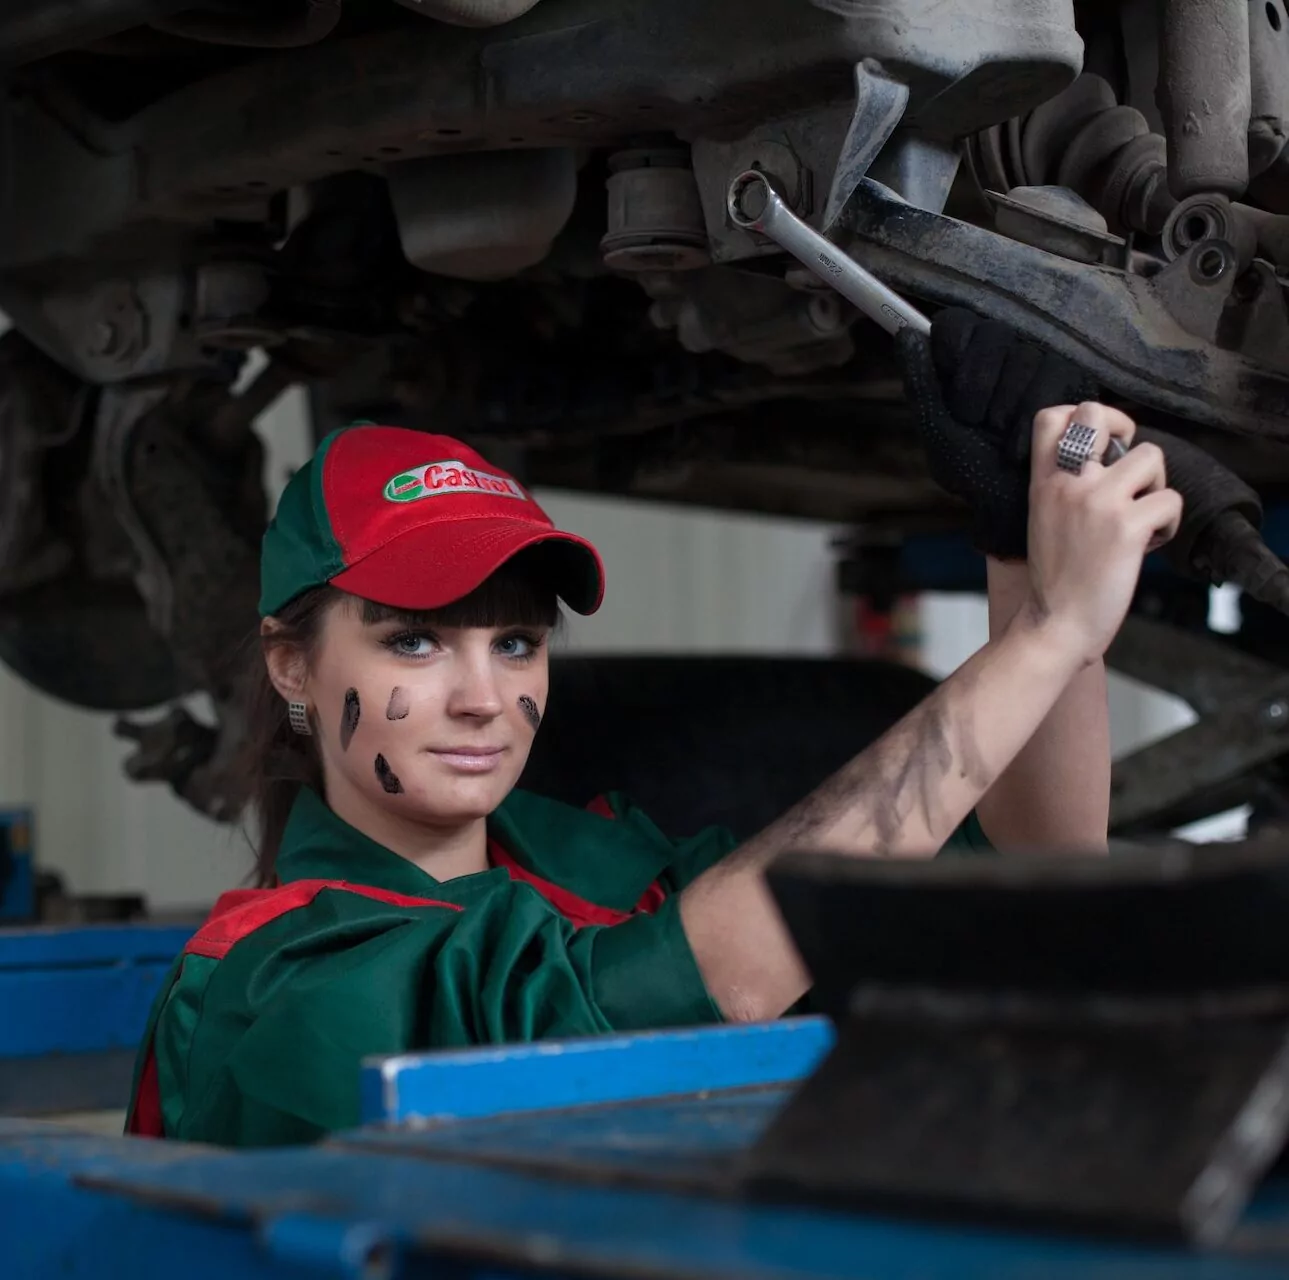 A woman performing an automotive trade job